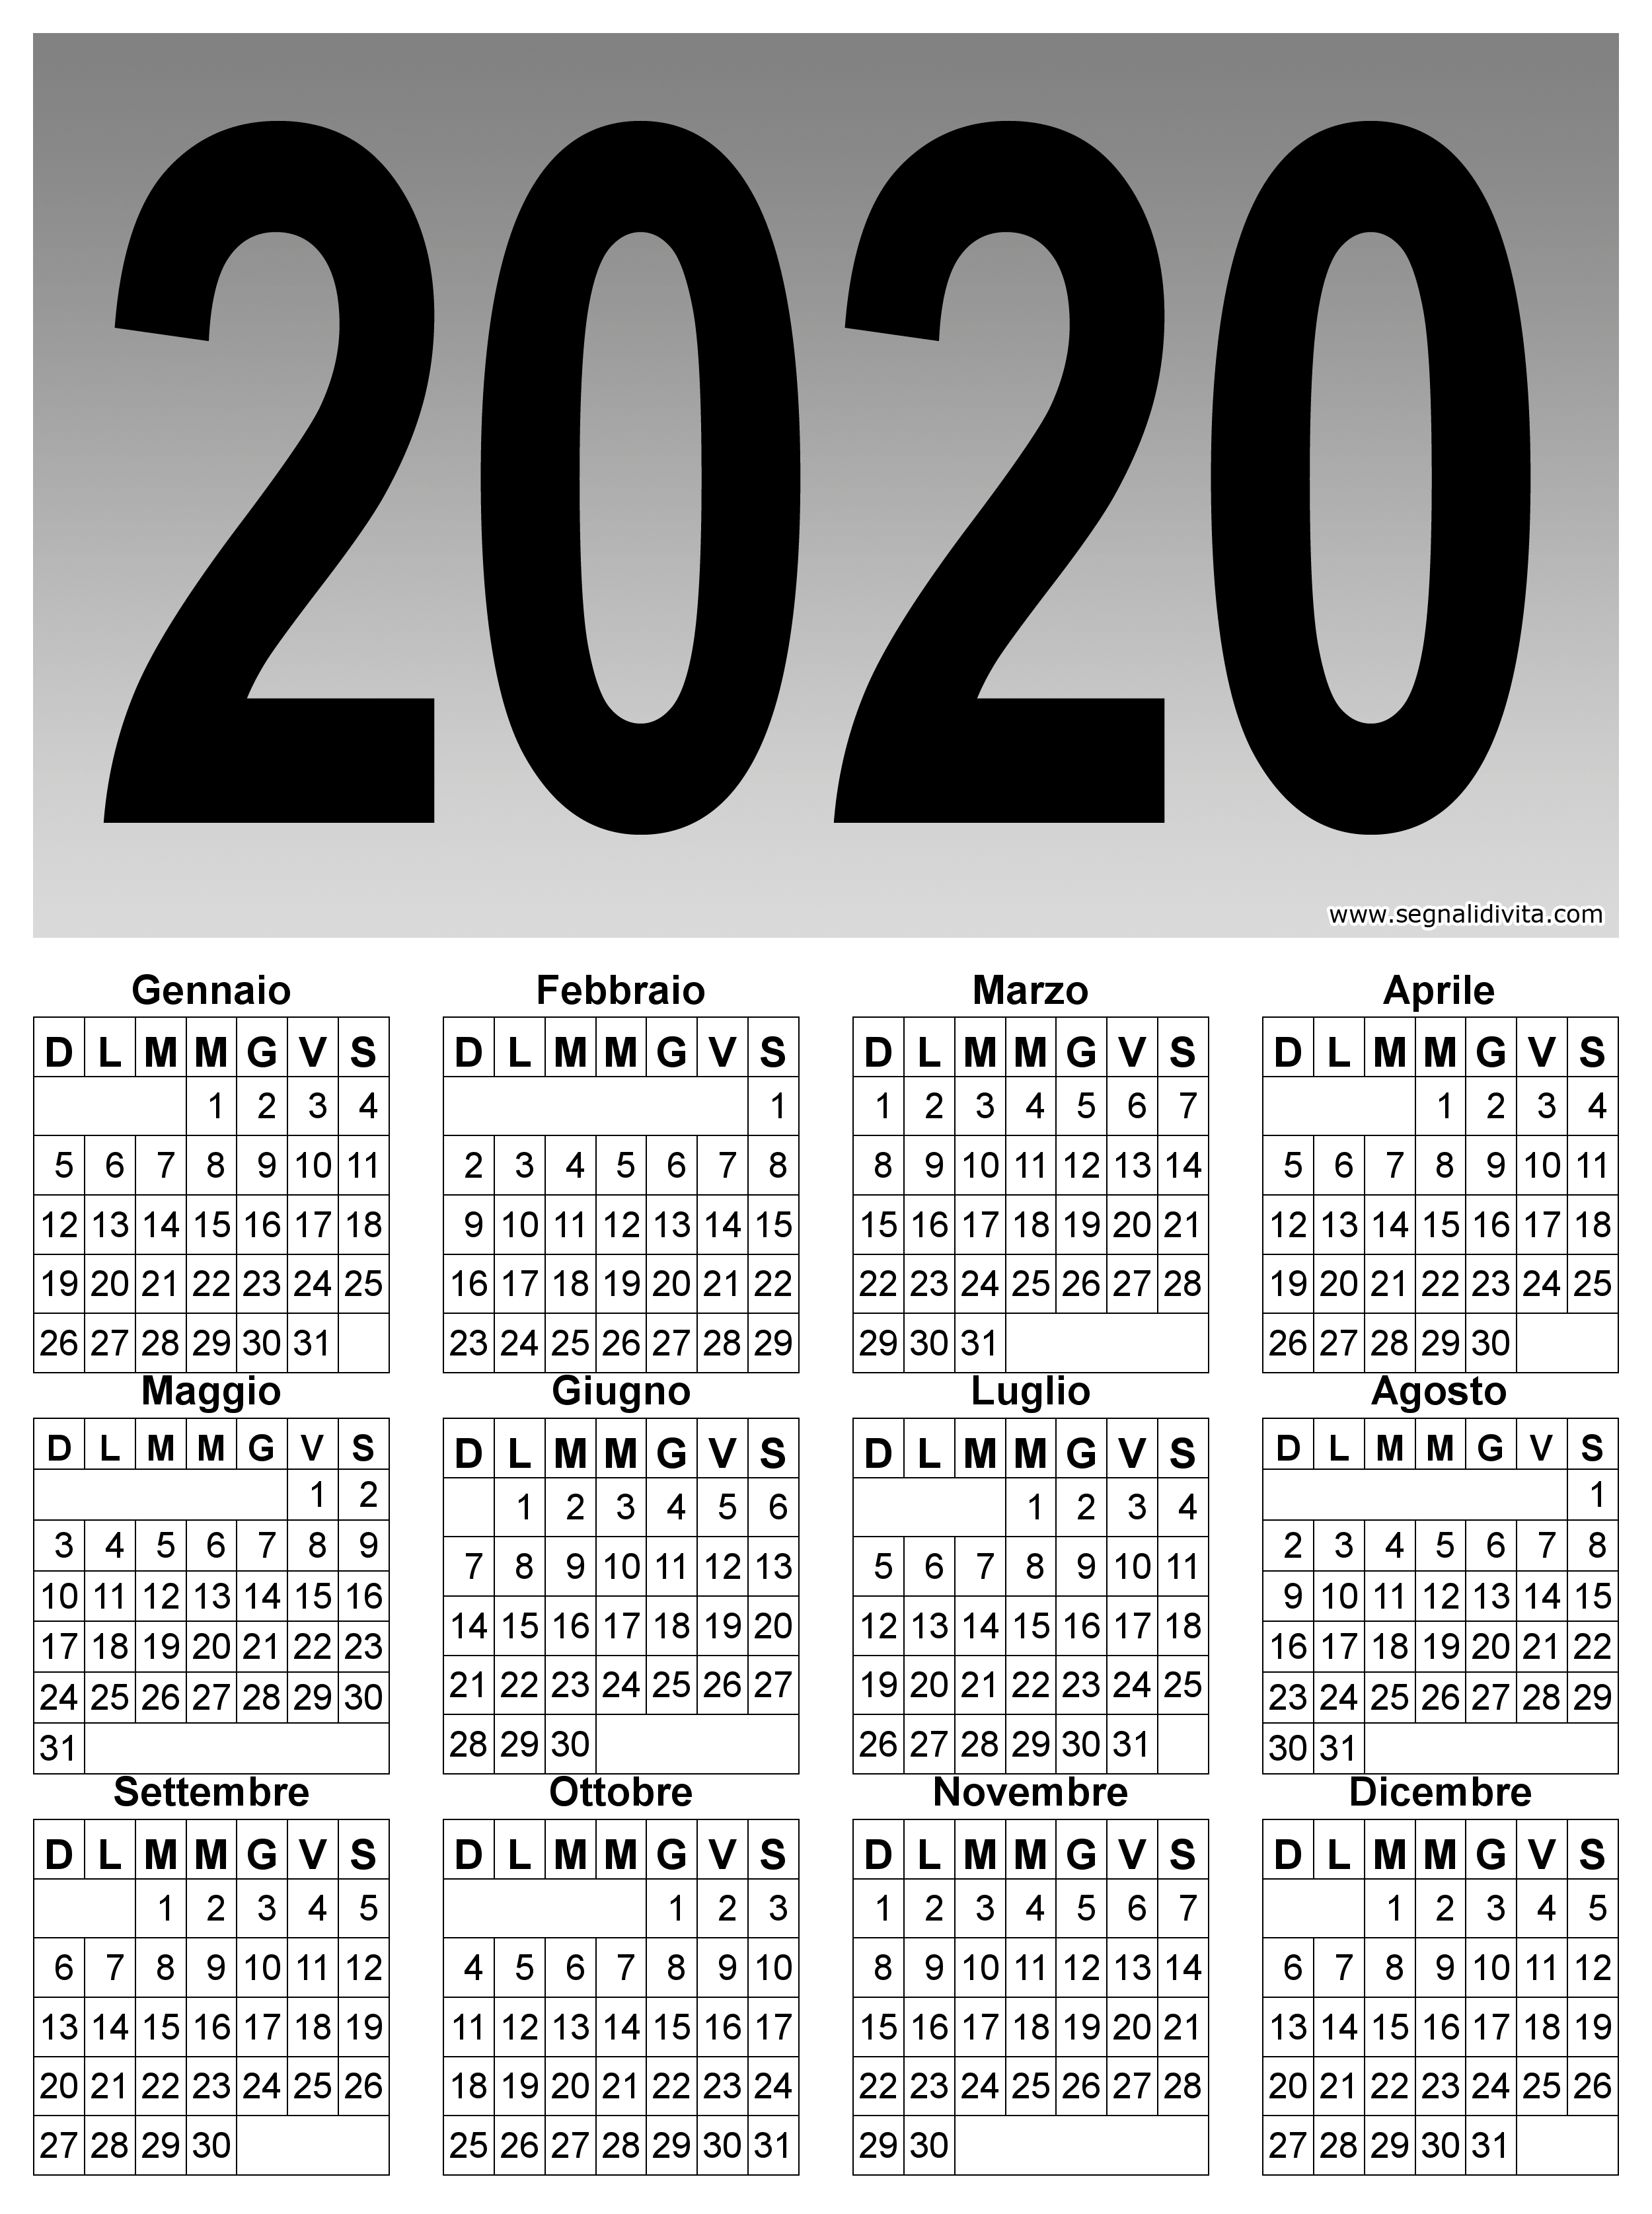 Calendario 2020 extra large: 2500 x 3350 pixel